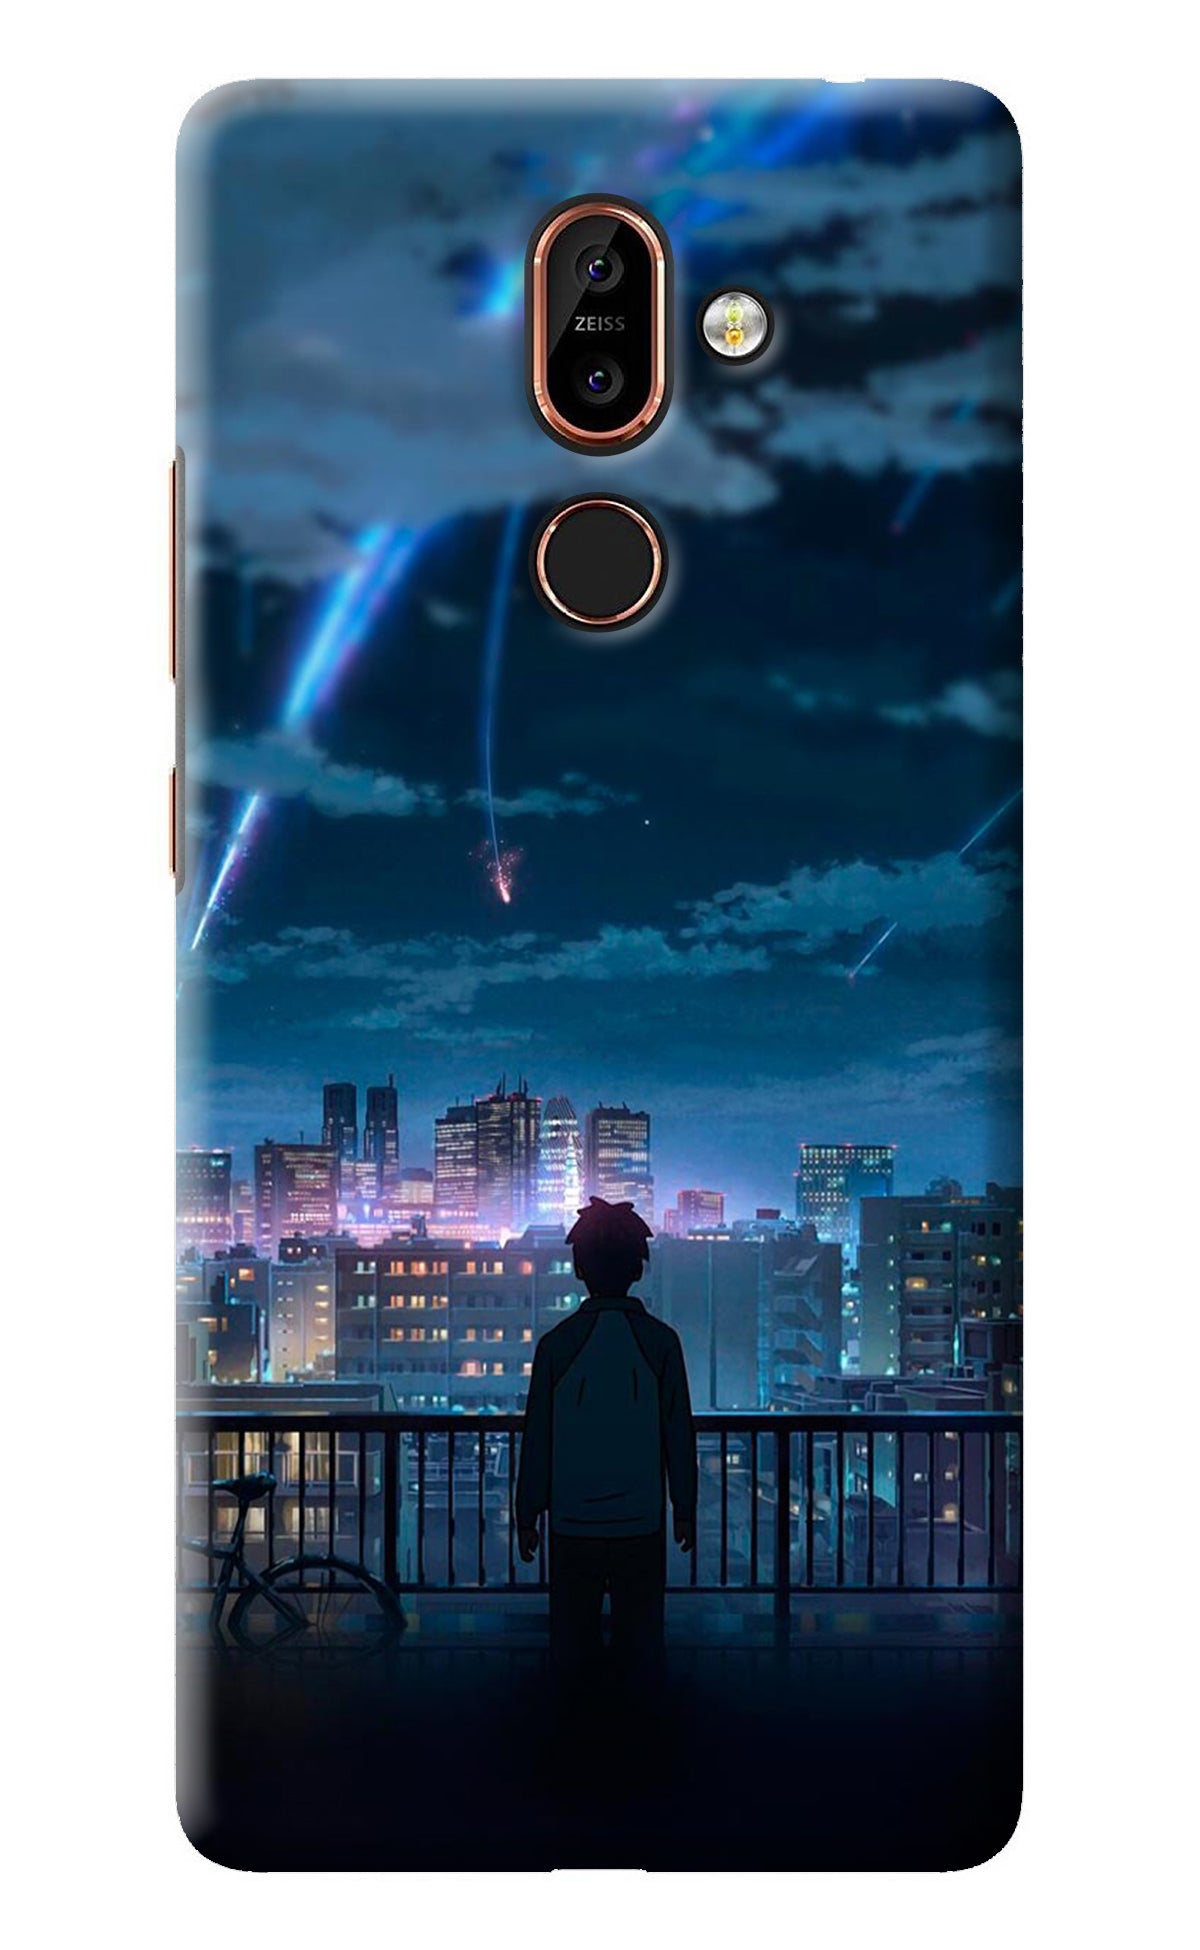 Anime Nokia 7 Plus Back Cover